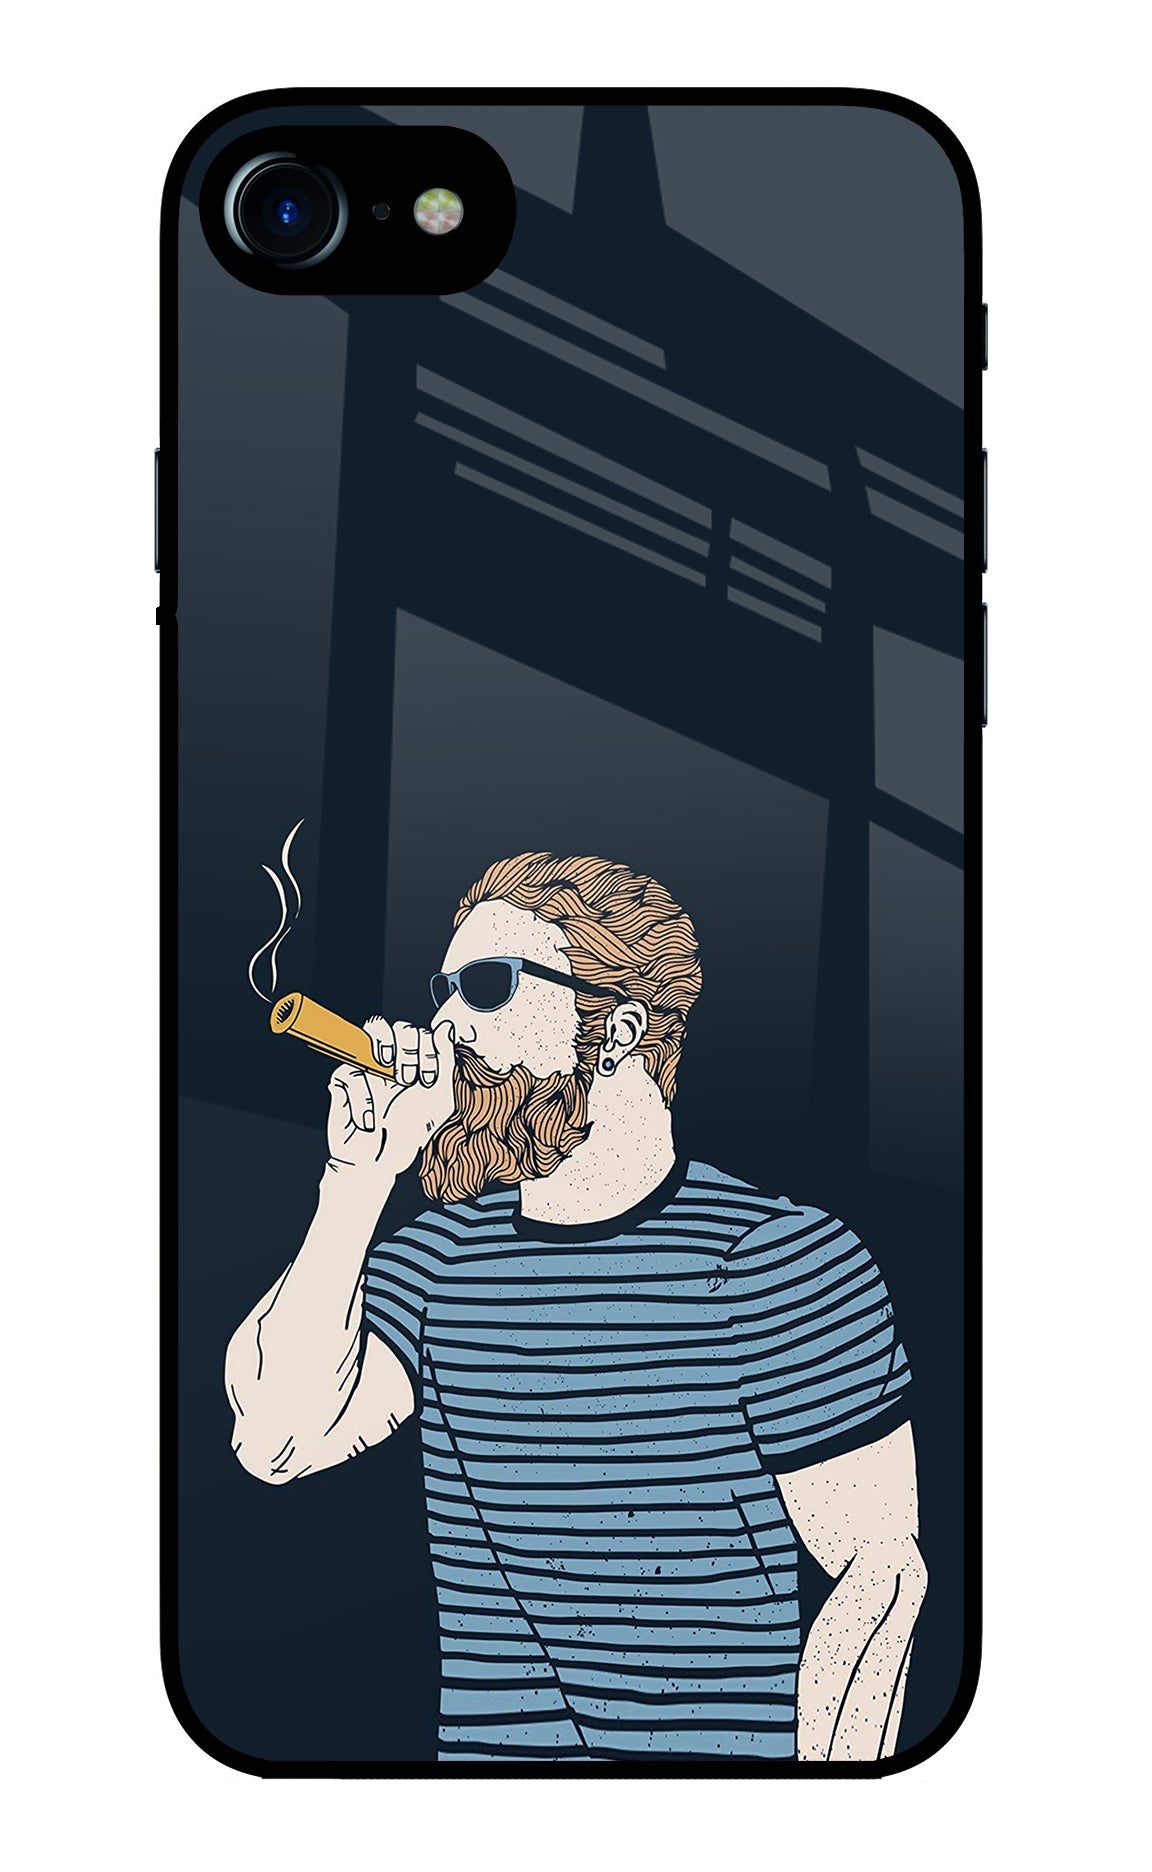 Smoking iPhone 8/SE 2020 Glass Case